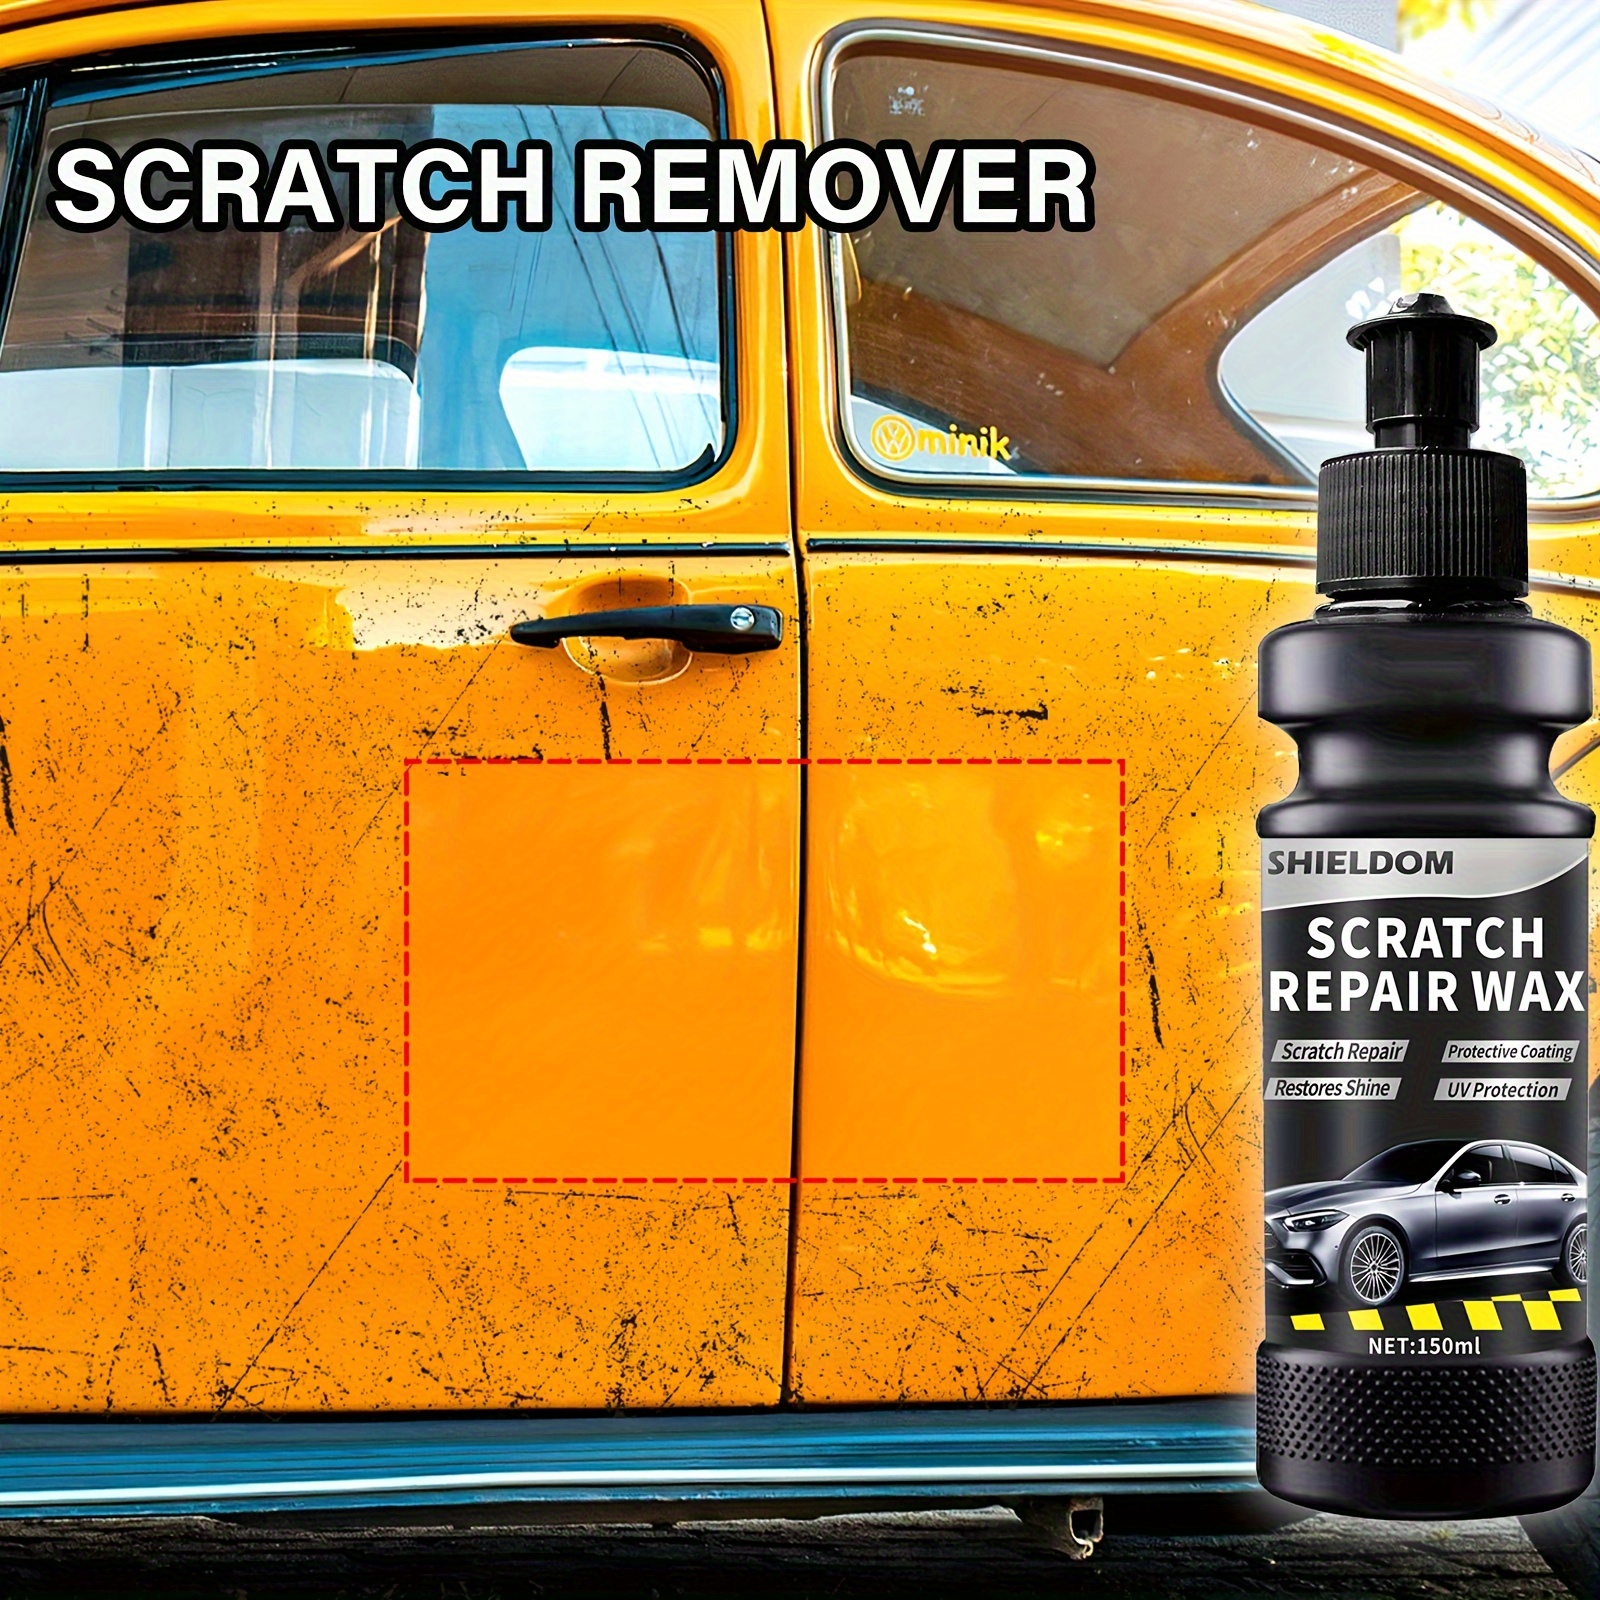 150ml Cleaning Agent New Car Coating Wax Anti Scratch Polish Liquid Nano  Ceramic Coat Detailing Wash Maintenance car accessories - AliExpress